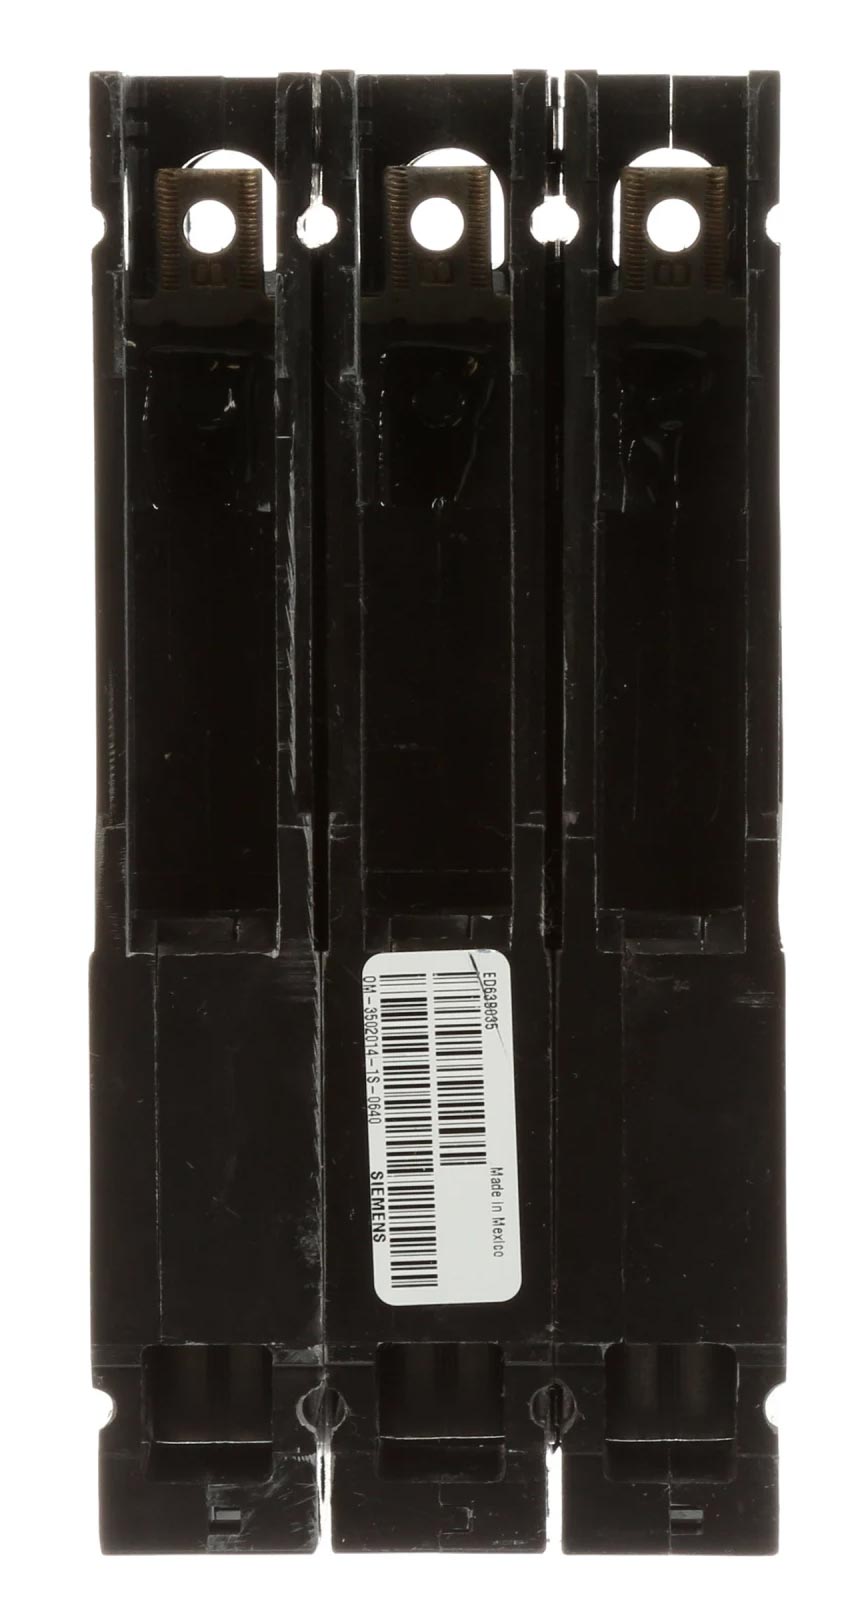 ED63B070 - Siemens - Molded Case Circuit Breaker